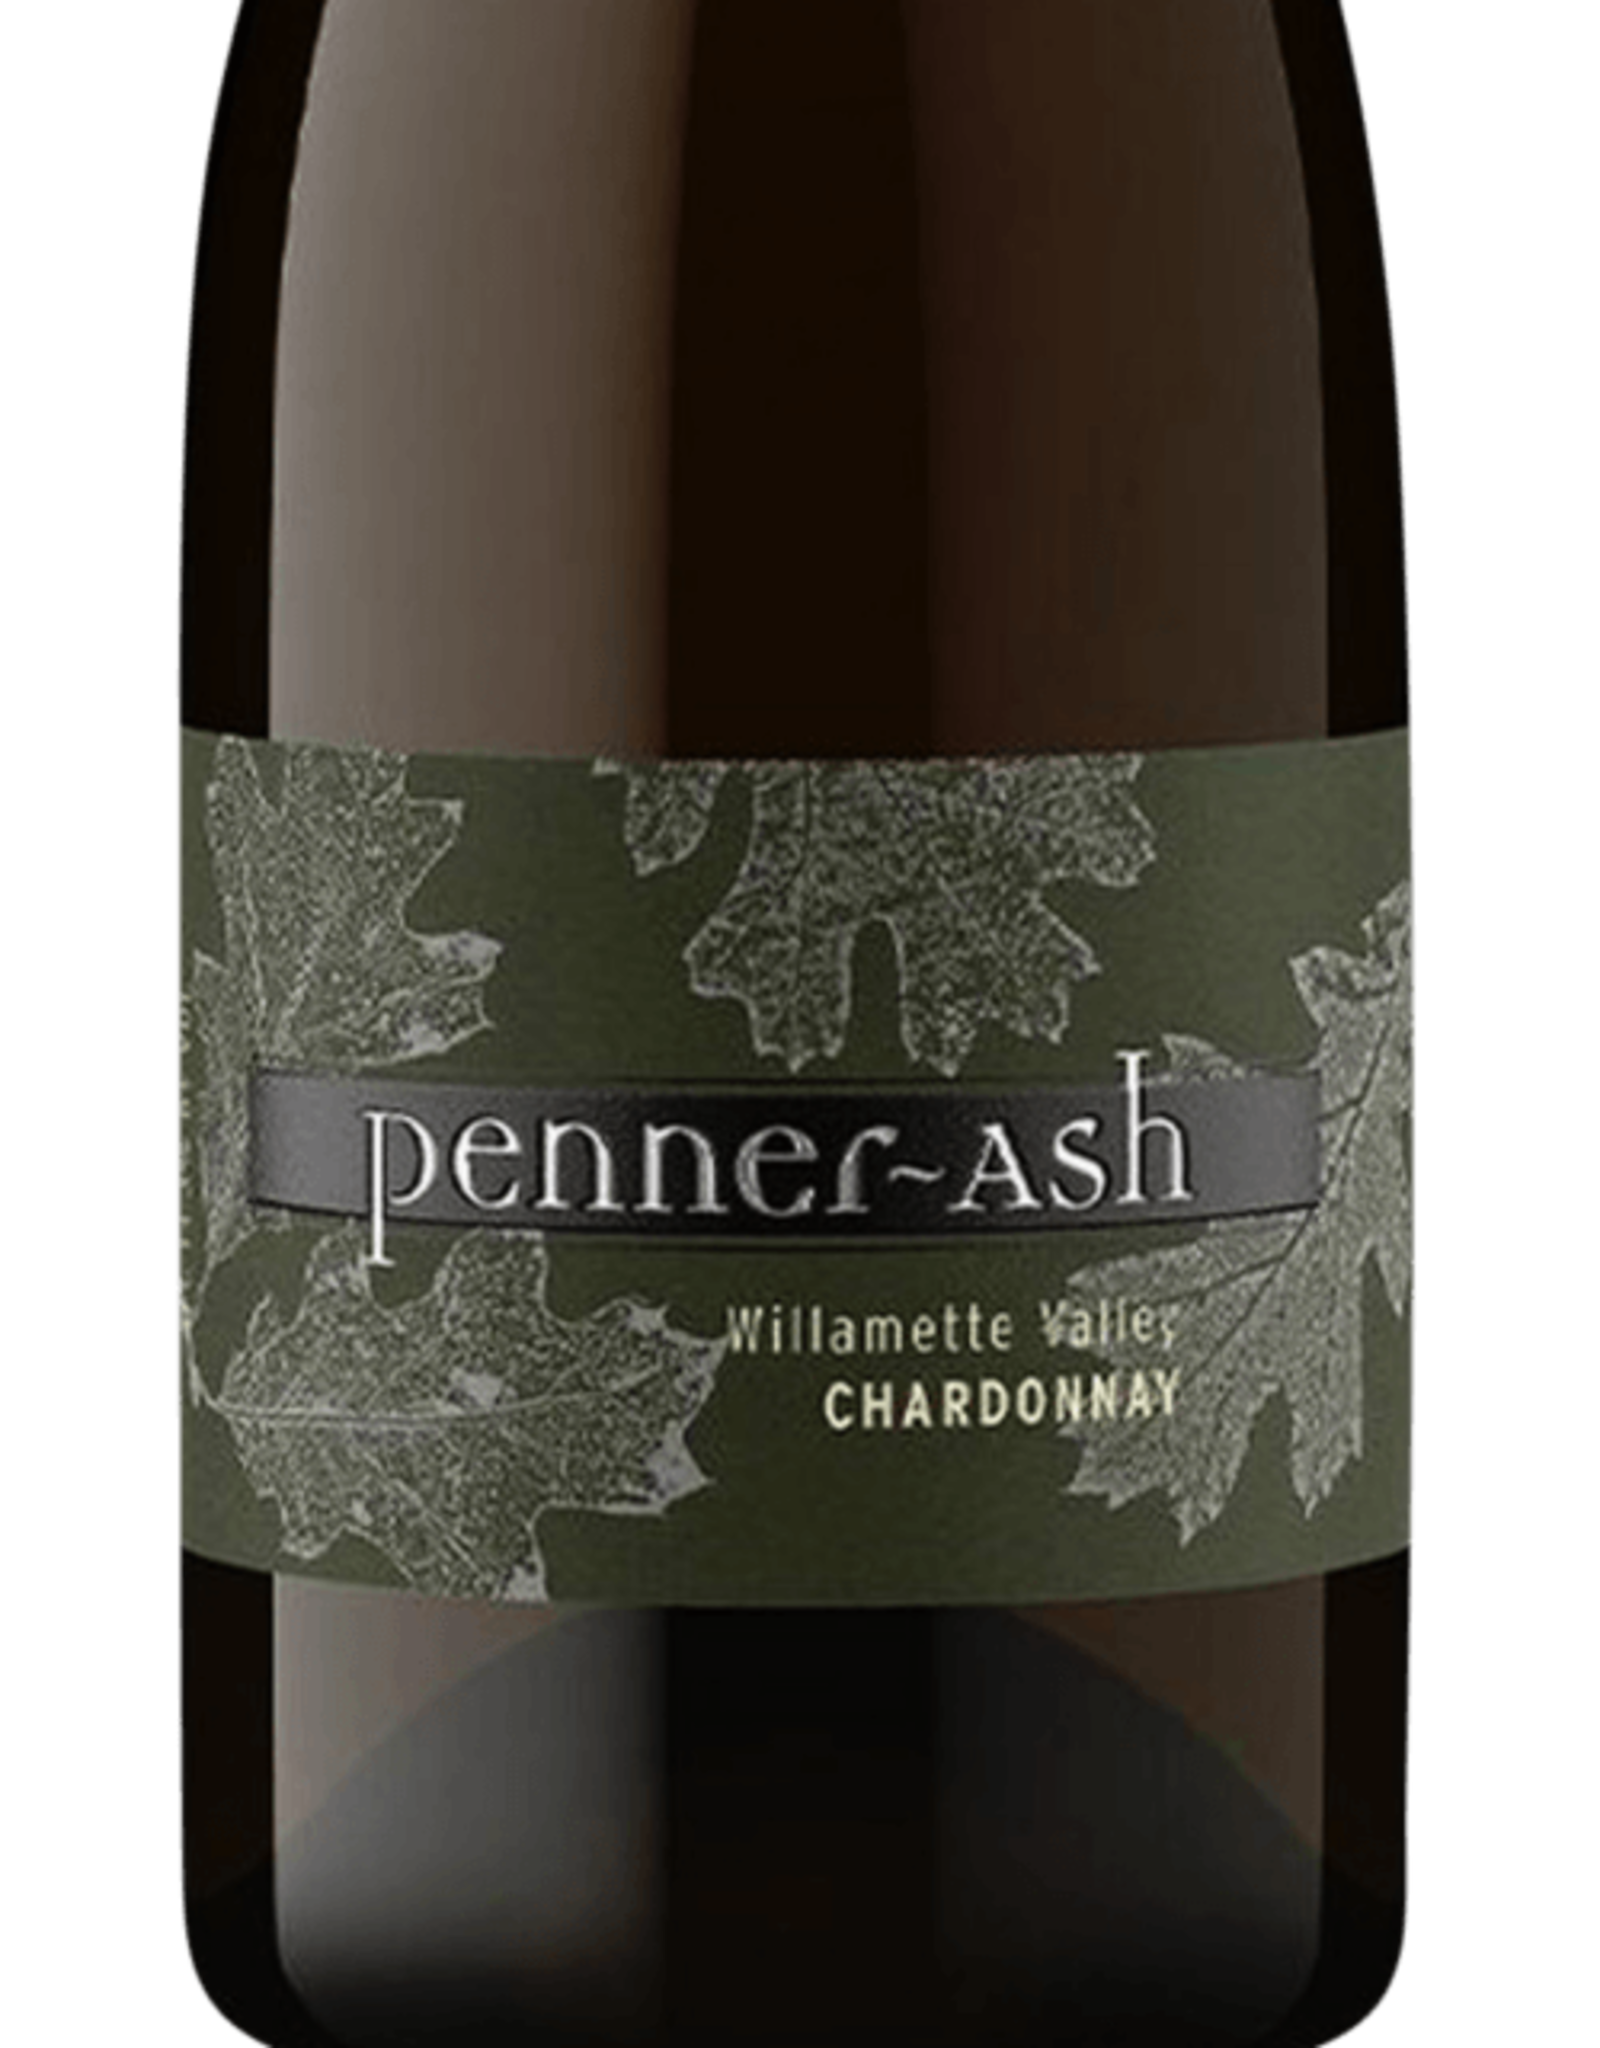 Penner-Ash Chardonnay 2019